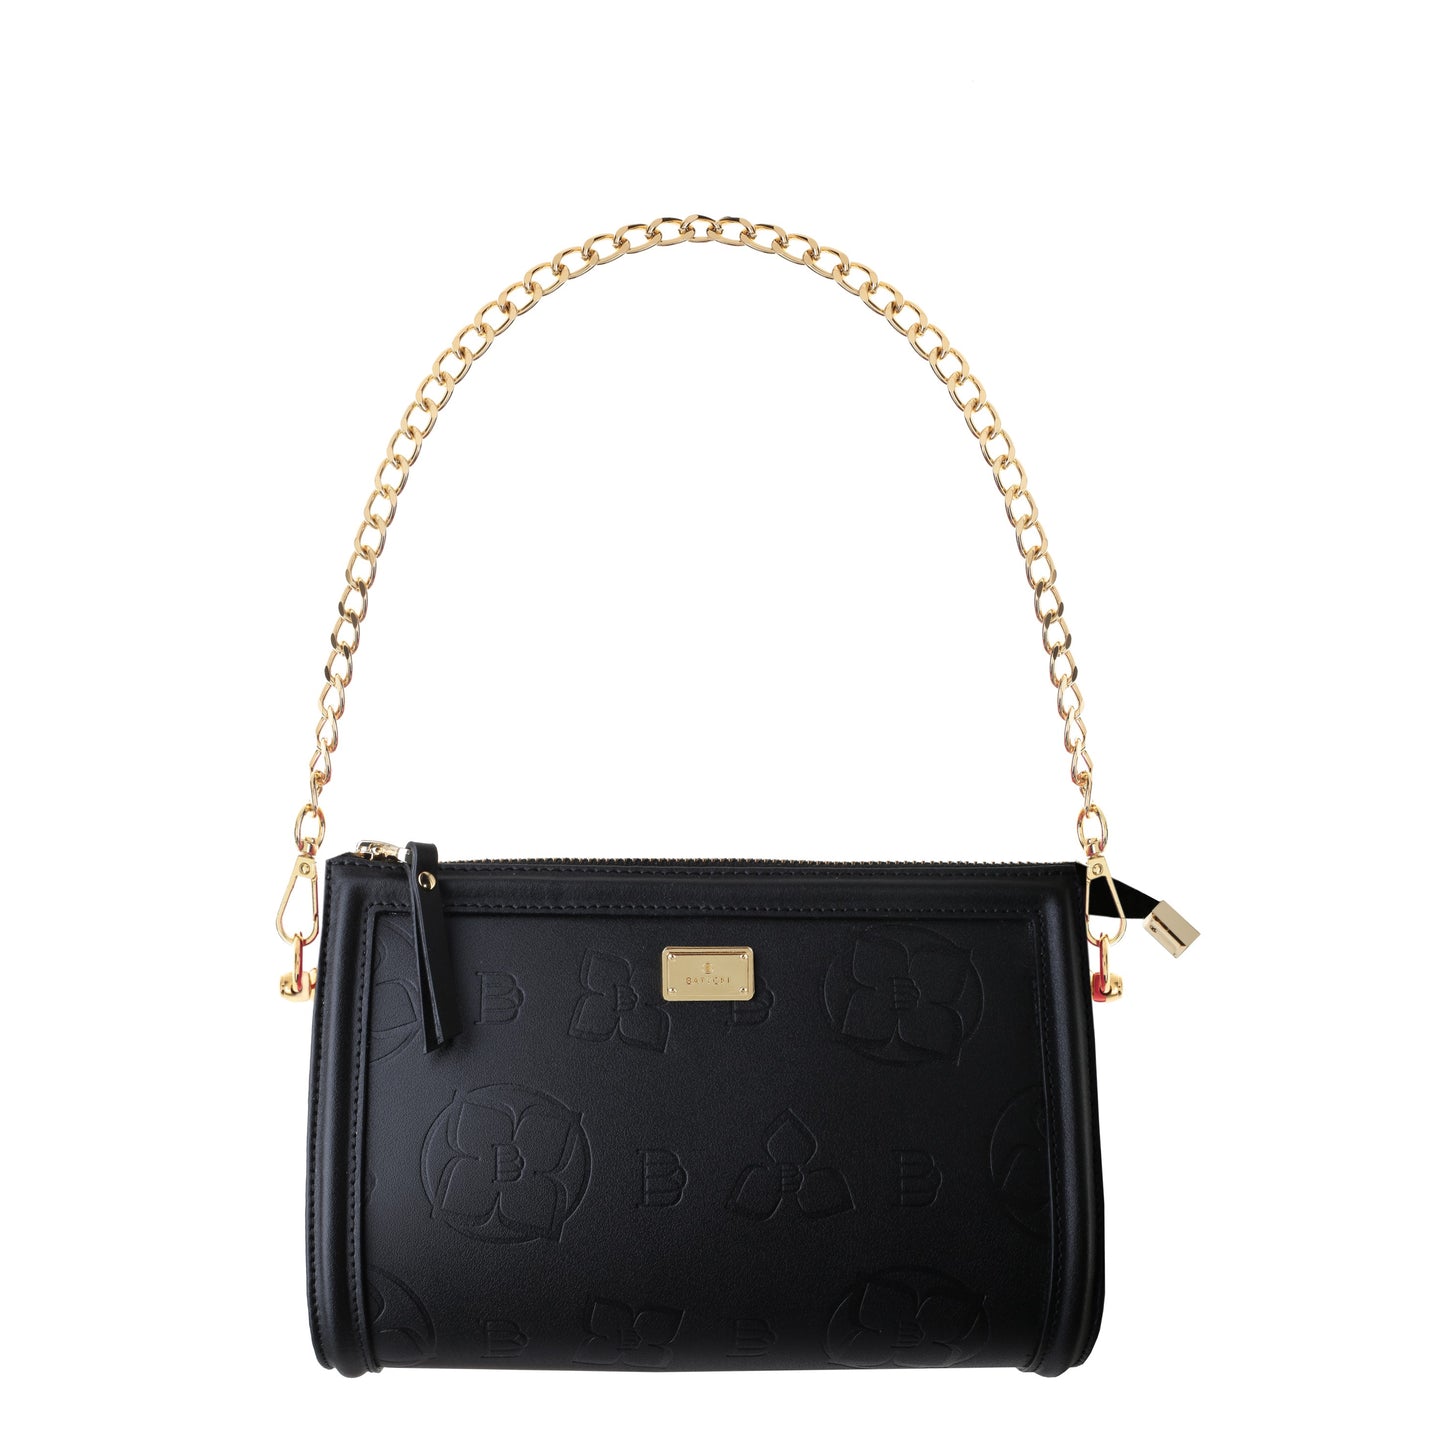 FLAMMY STAMP NAPA BLACK women's leather handbag